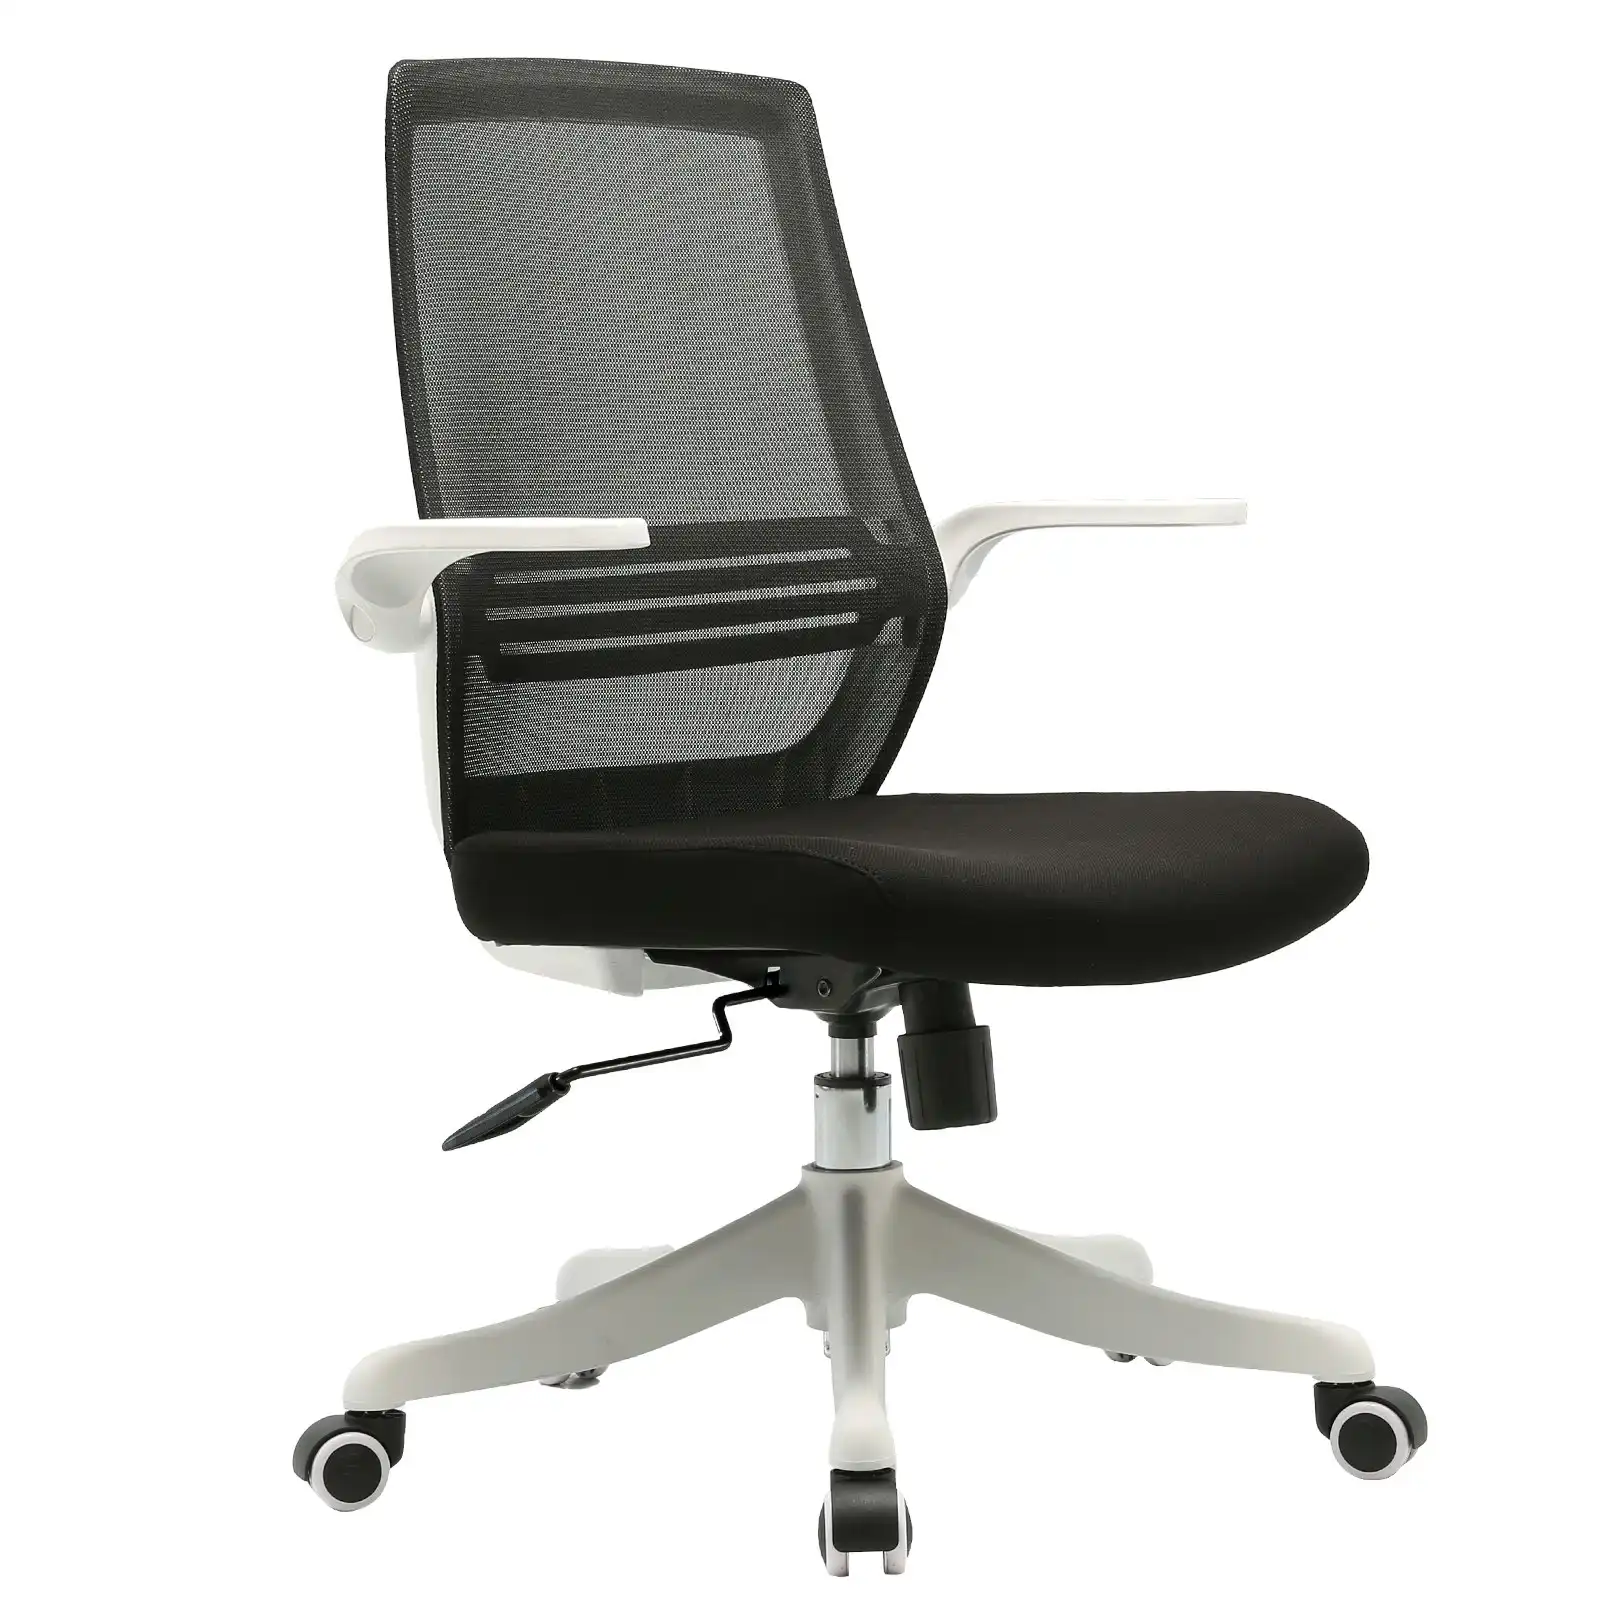 SIHOO M76 Ergonomics Home Office Chair Meeting Room Chair - Black